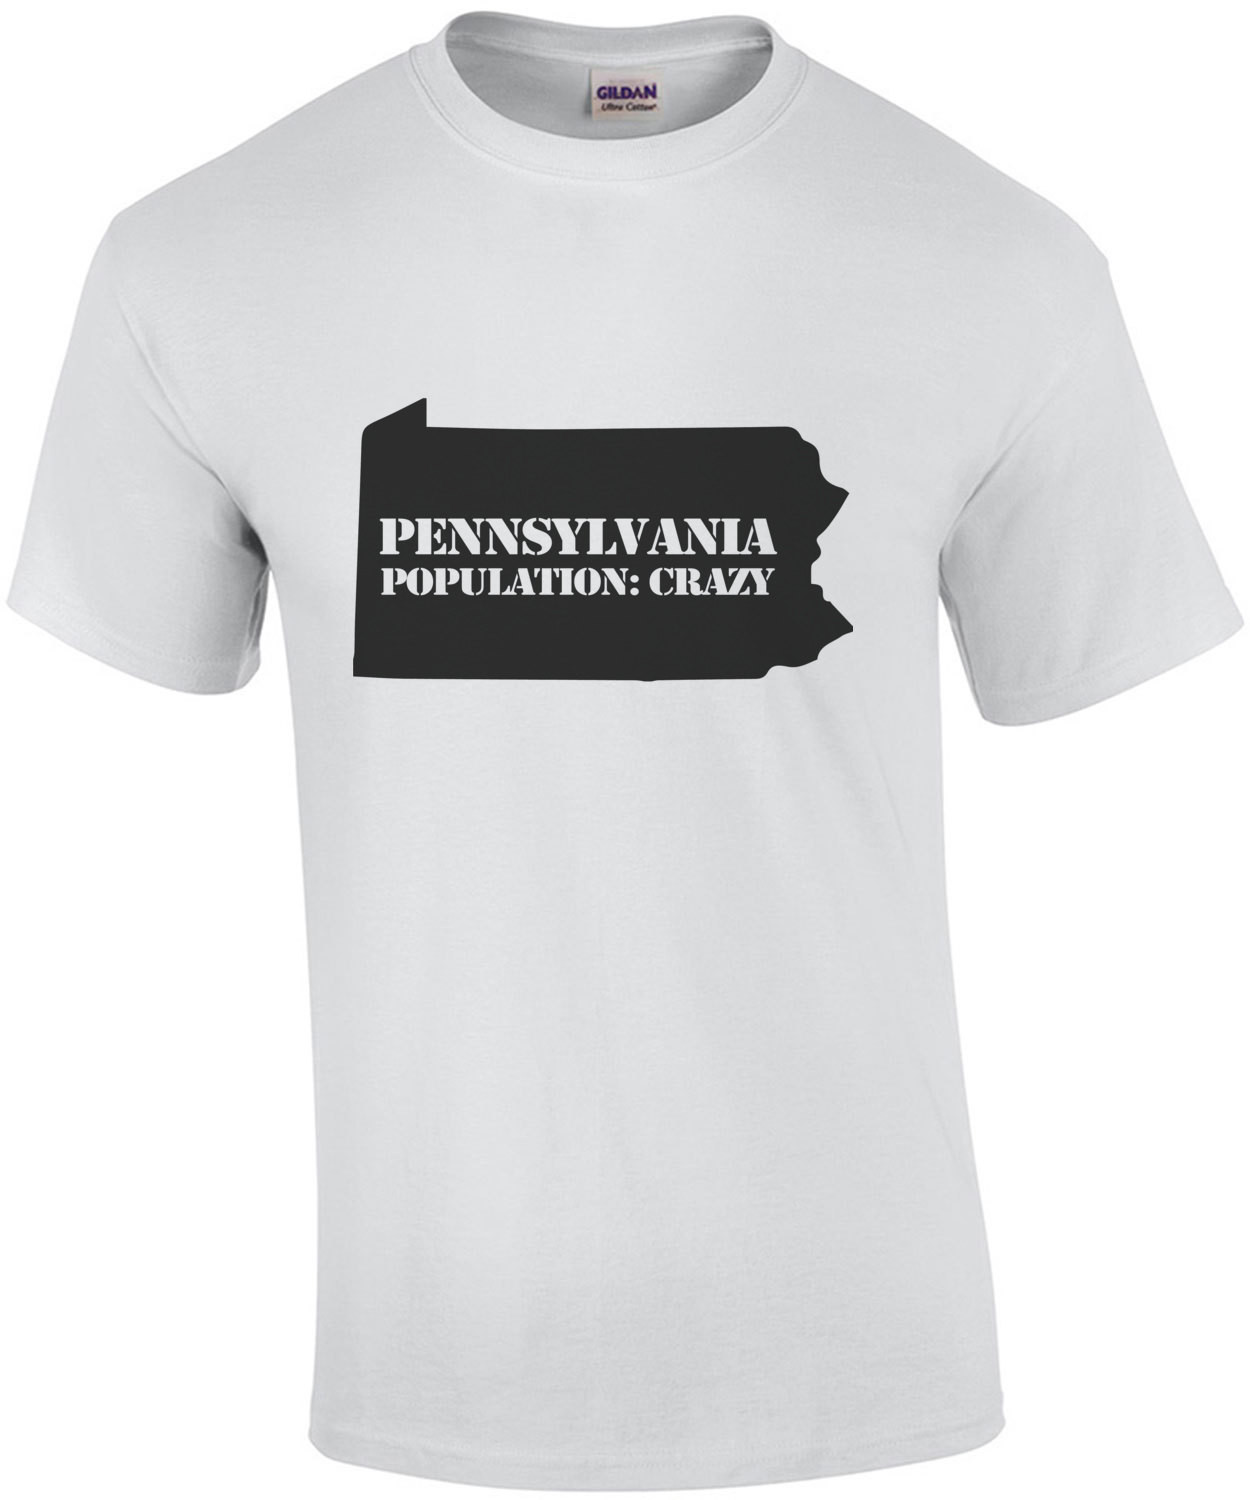 Pennsylvania - Population: Crazy - Pennsylvania T-Shirt